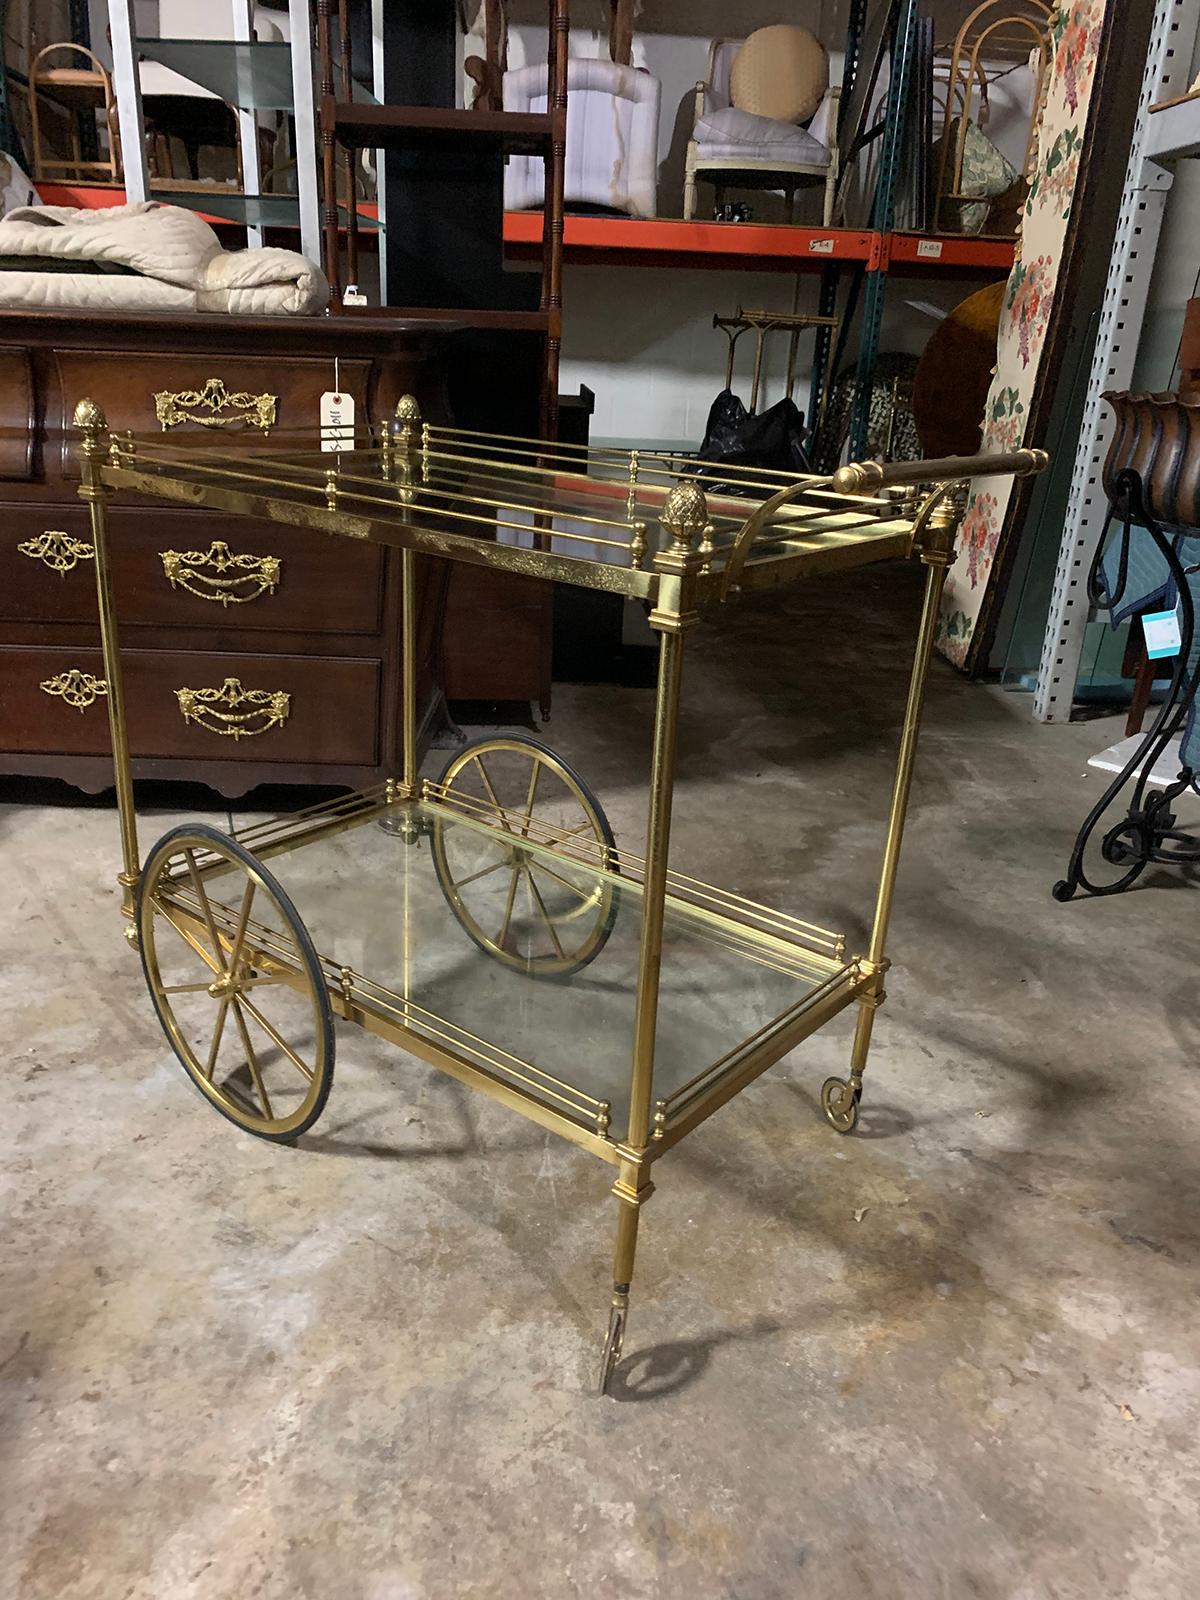 Mid-20th century brass bar cart.
two glass shelves